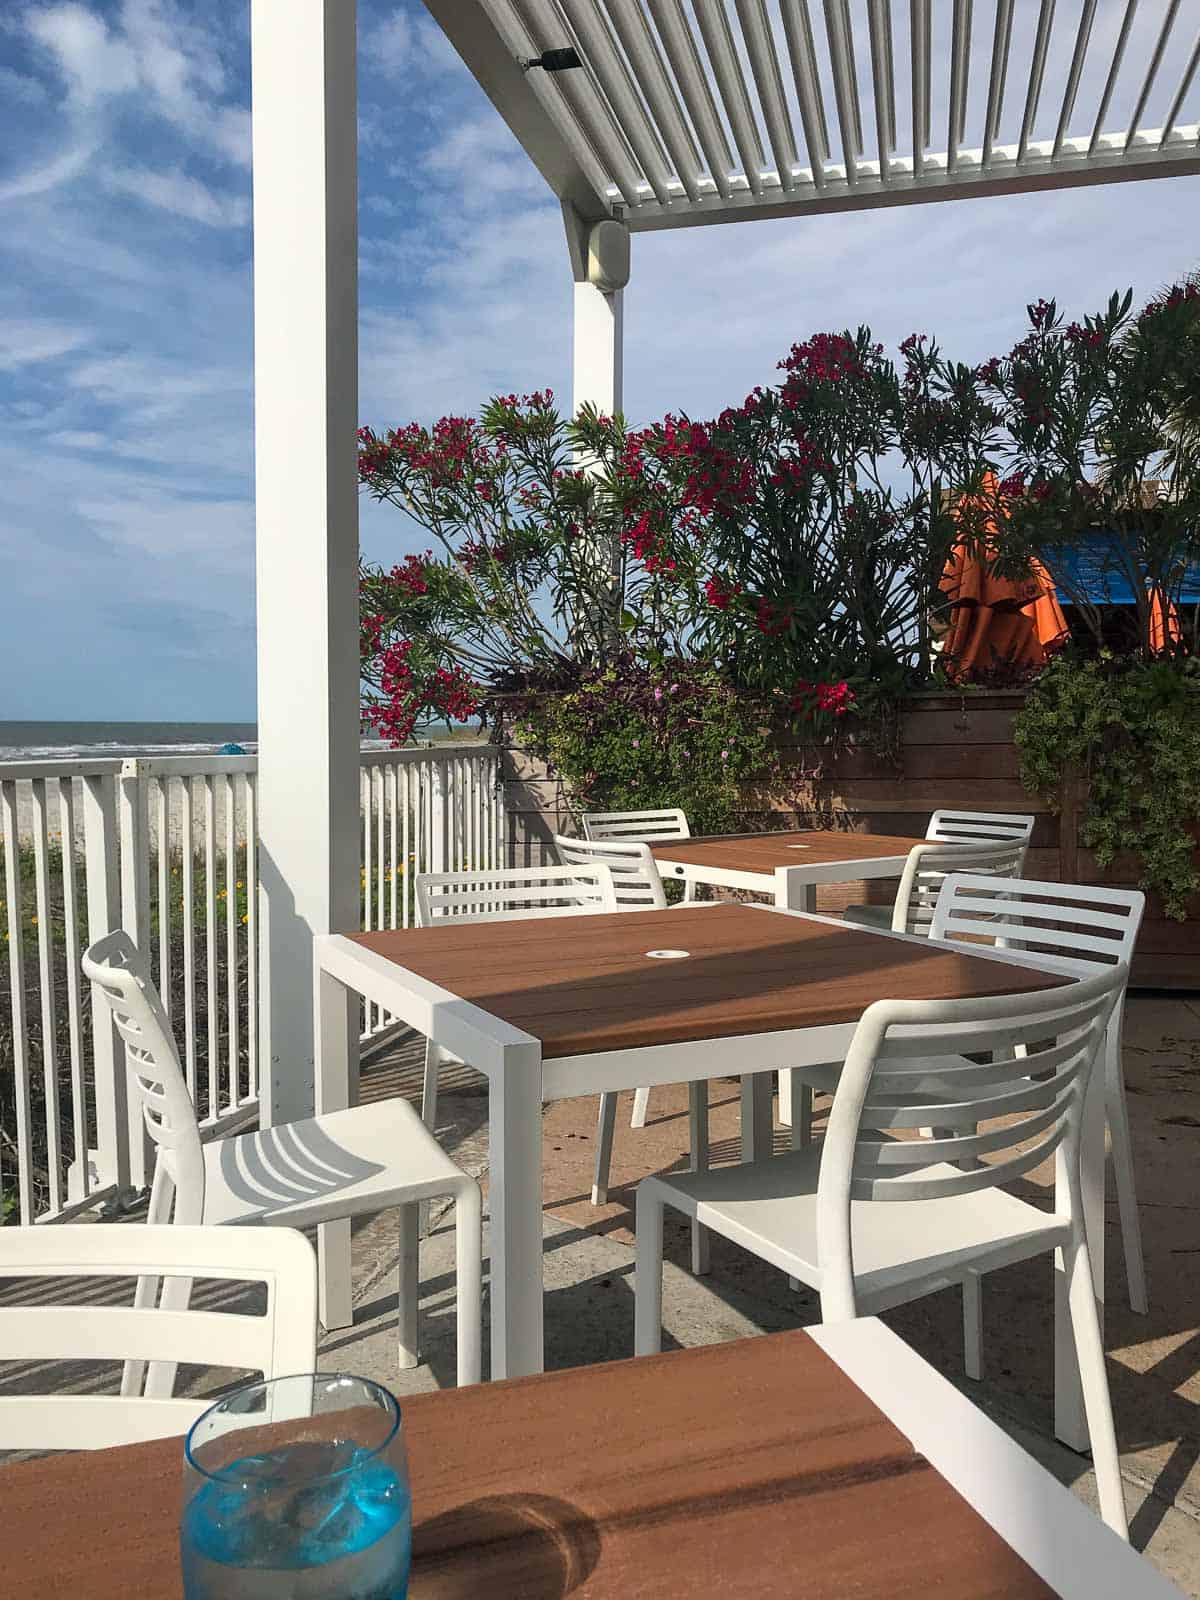 BLU restaurant patio by the beach